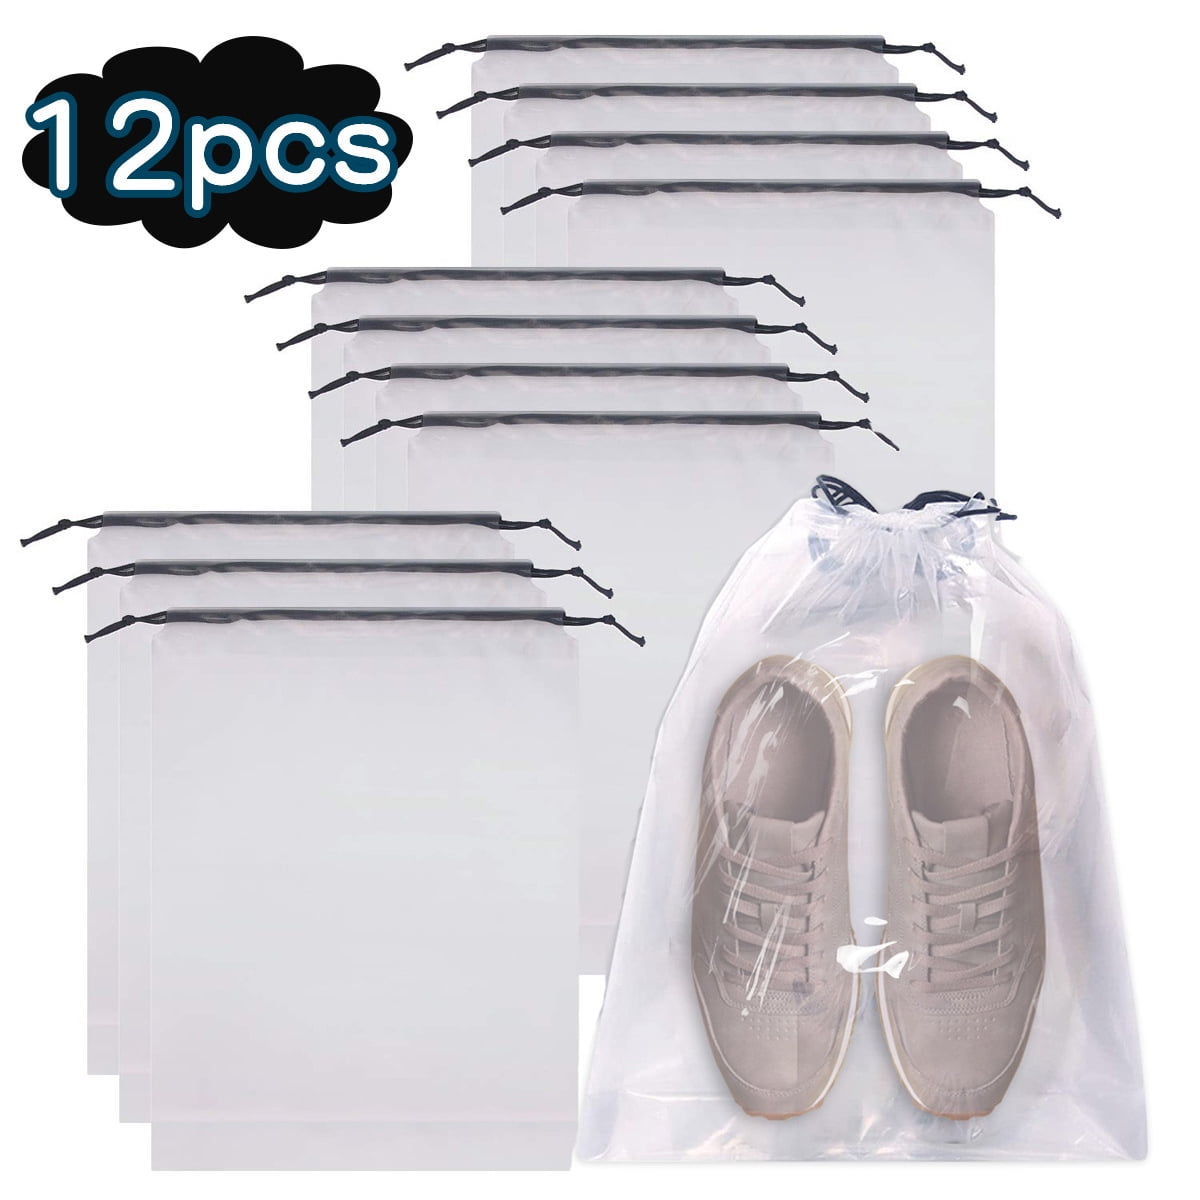 3Pcs Shoe Storage Bags Drawstring Storage Pouch Bag Shoes Organizer  Transparent Shoe Bag Non-Woven & Breathable for Travel, Home Organization  Outdoors